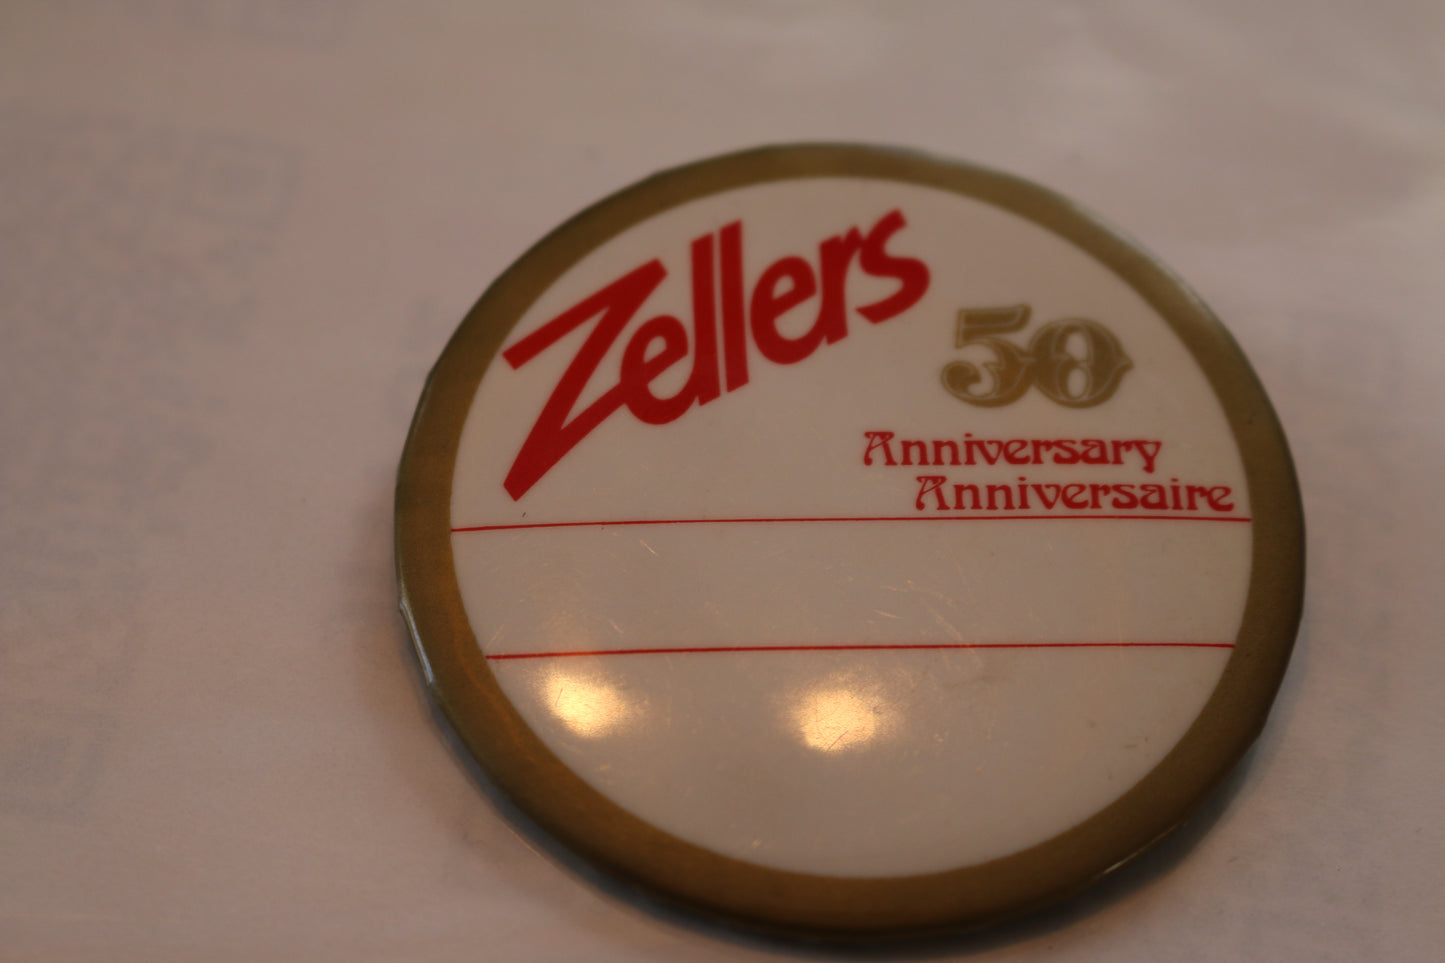 Vintage Pin Button Zellers 50 Anniversary Anniversaire Pin